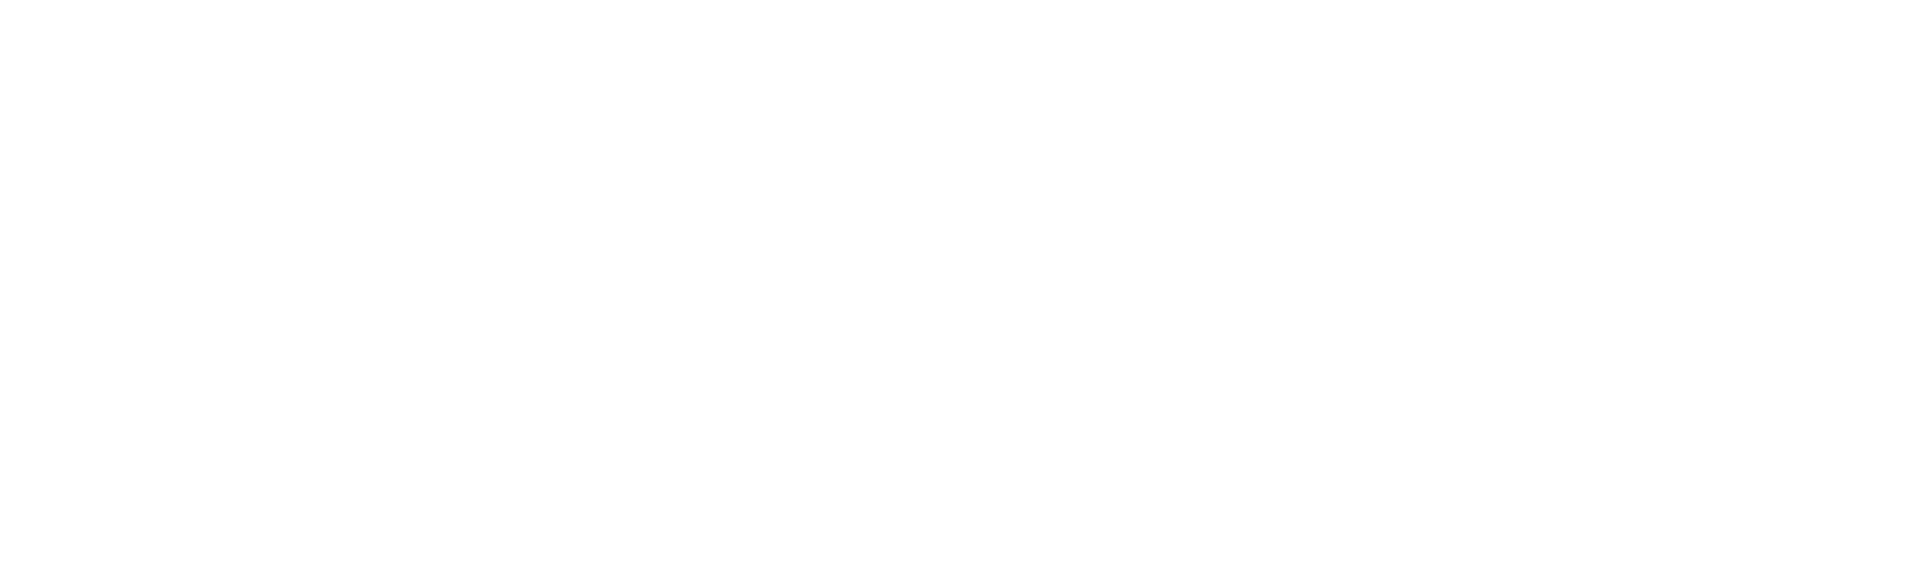 Digital Impact Audit Logo